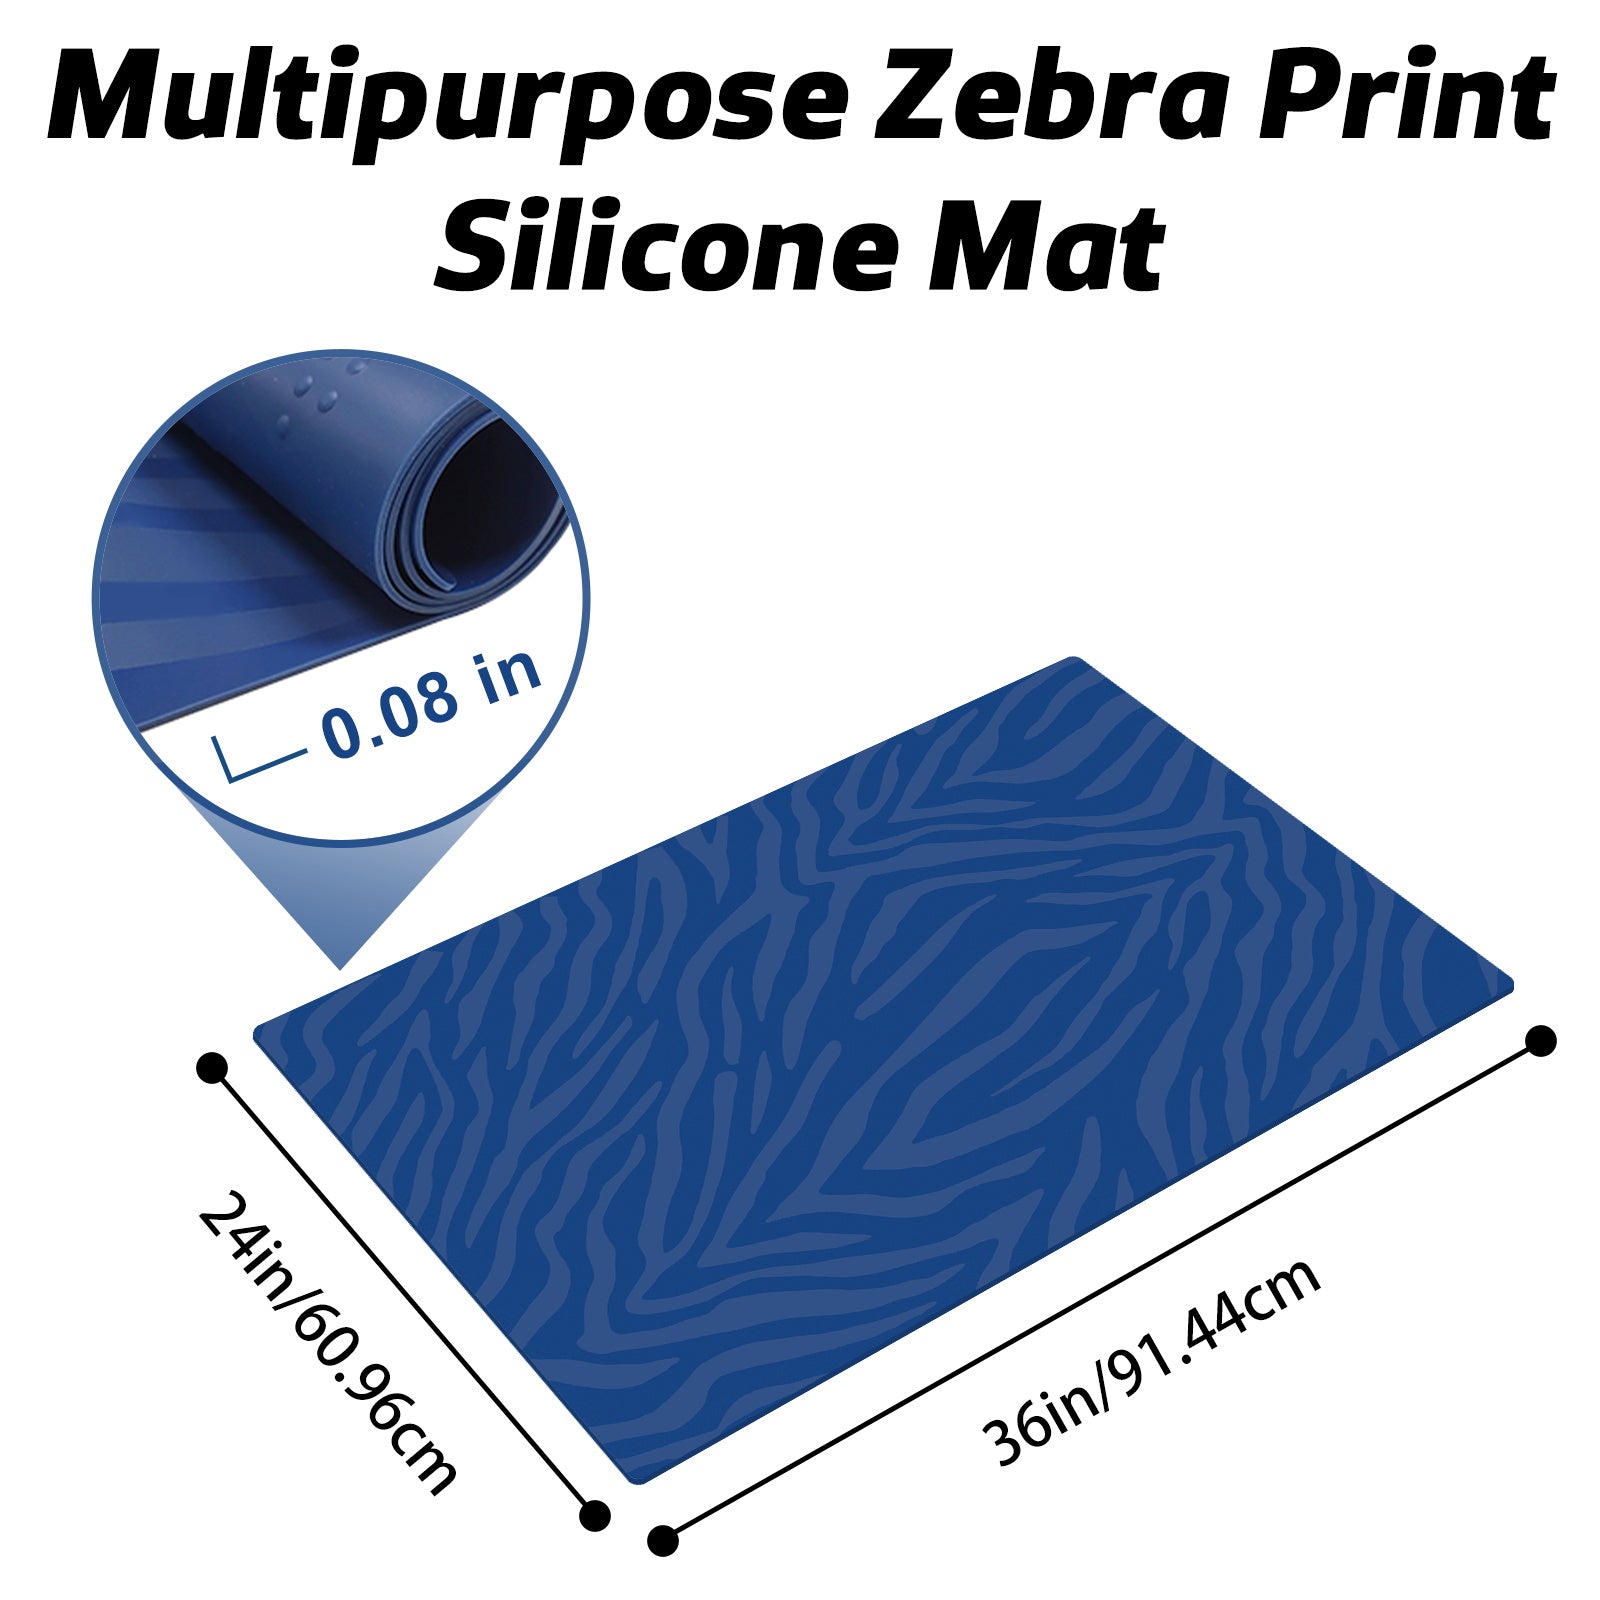 AECHY Zebra Print Heat Resistant Silicone Mat 36"×24"×0.08”